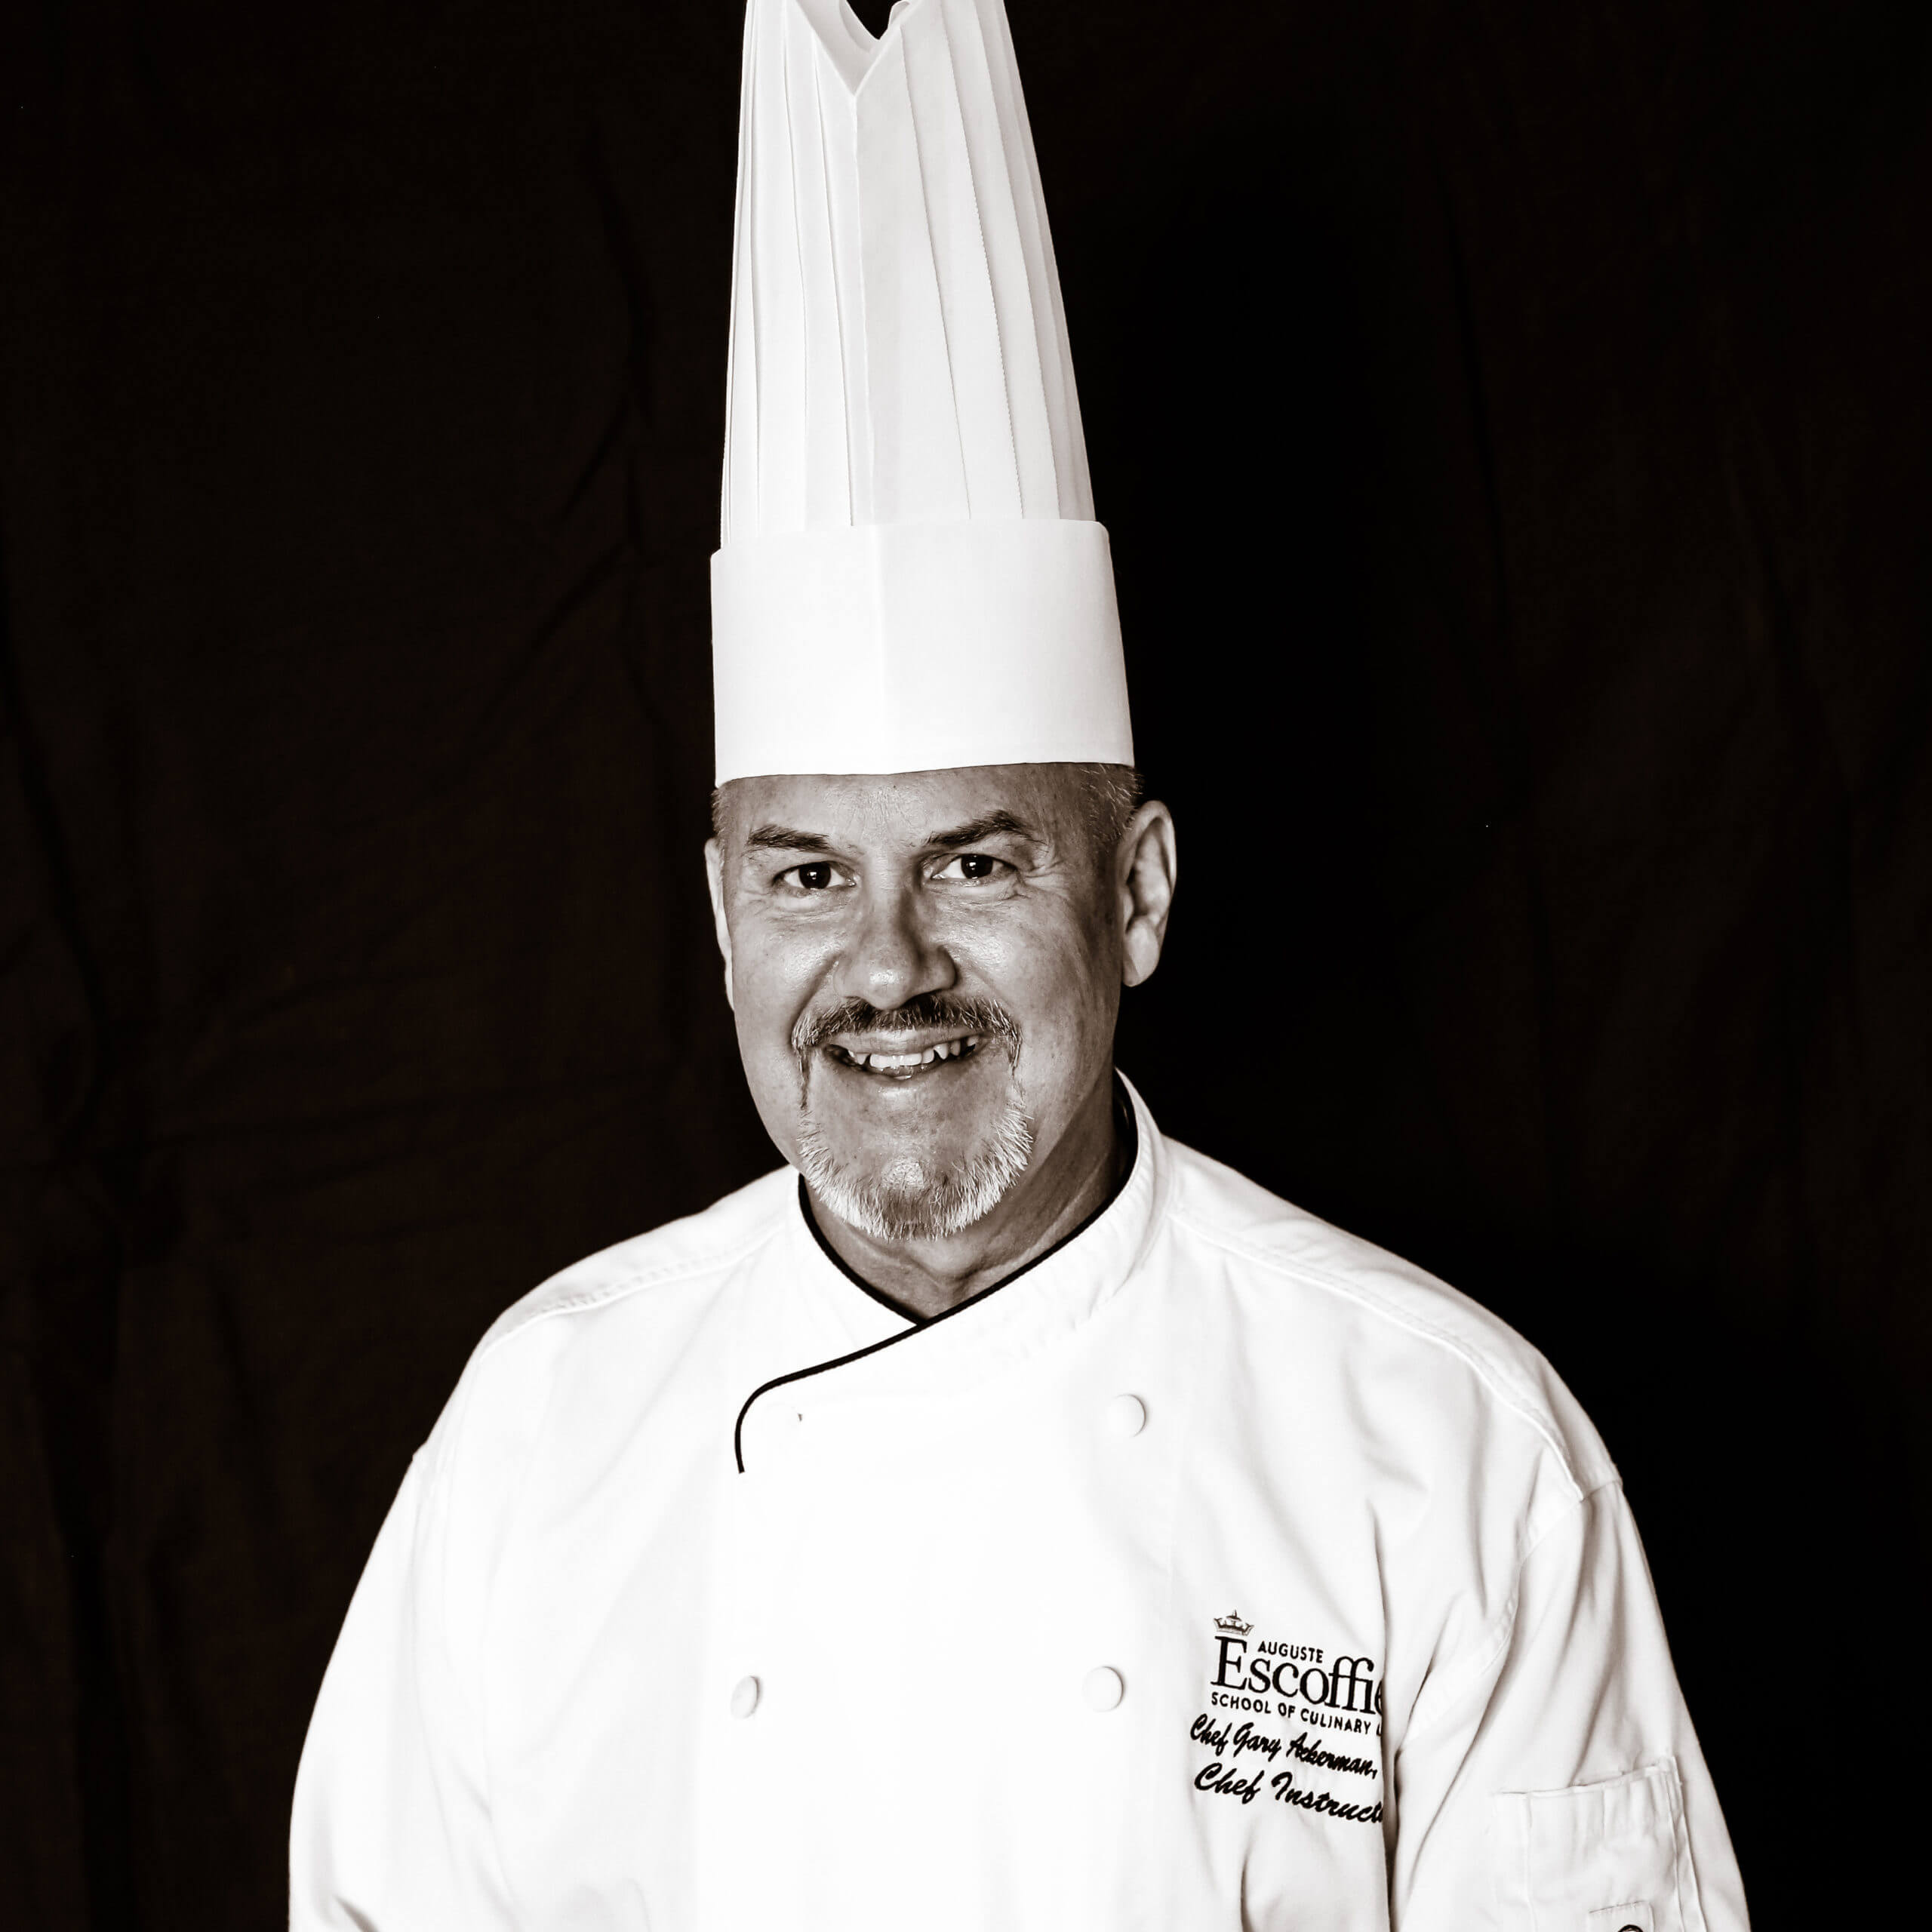 Austin Culinary Chef Instructor Gary Ackerman